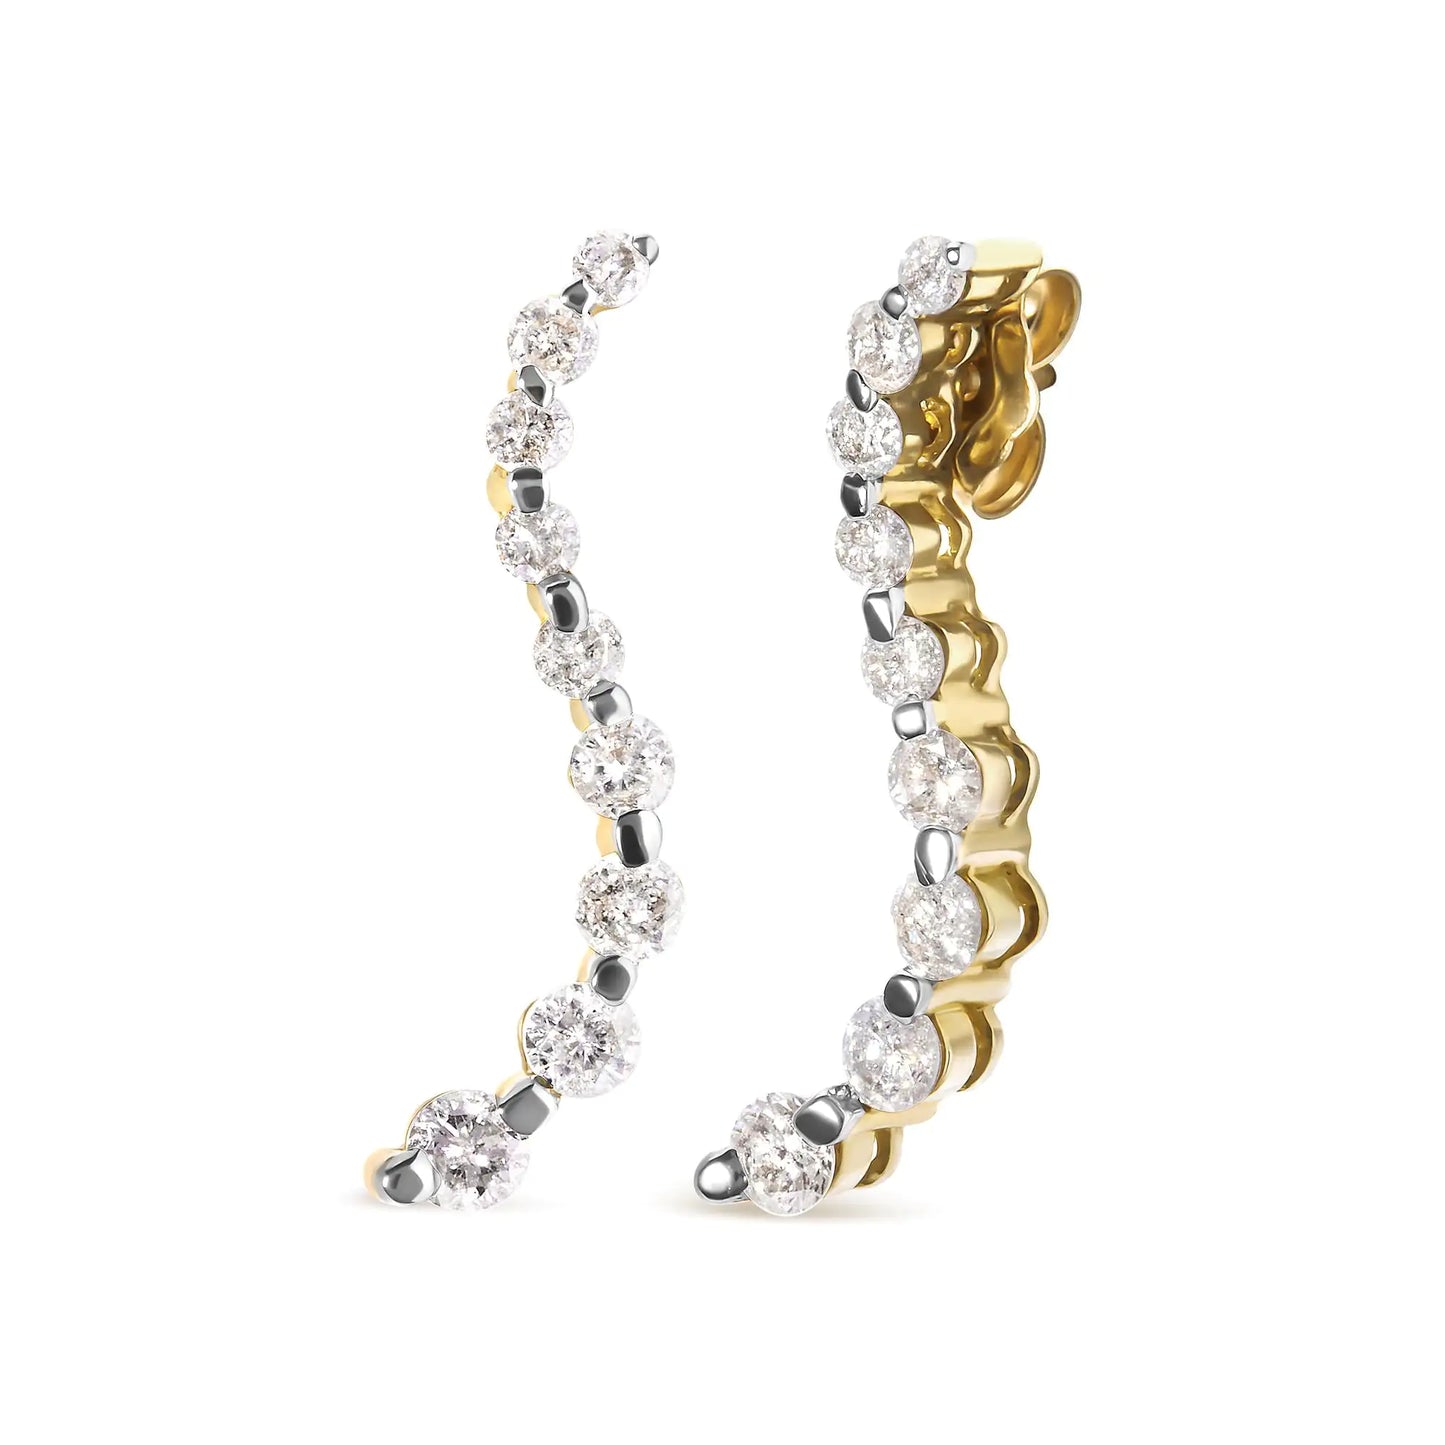 14K Yellow Gold 1.00 Cttw Round-Cut Diamond Graduated Journey Stud Earrings (I-J Color, I2-I3 Clarity)